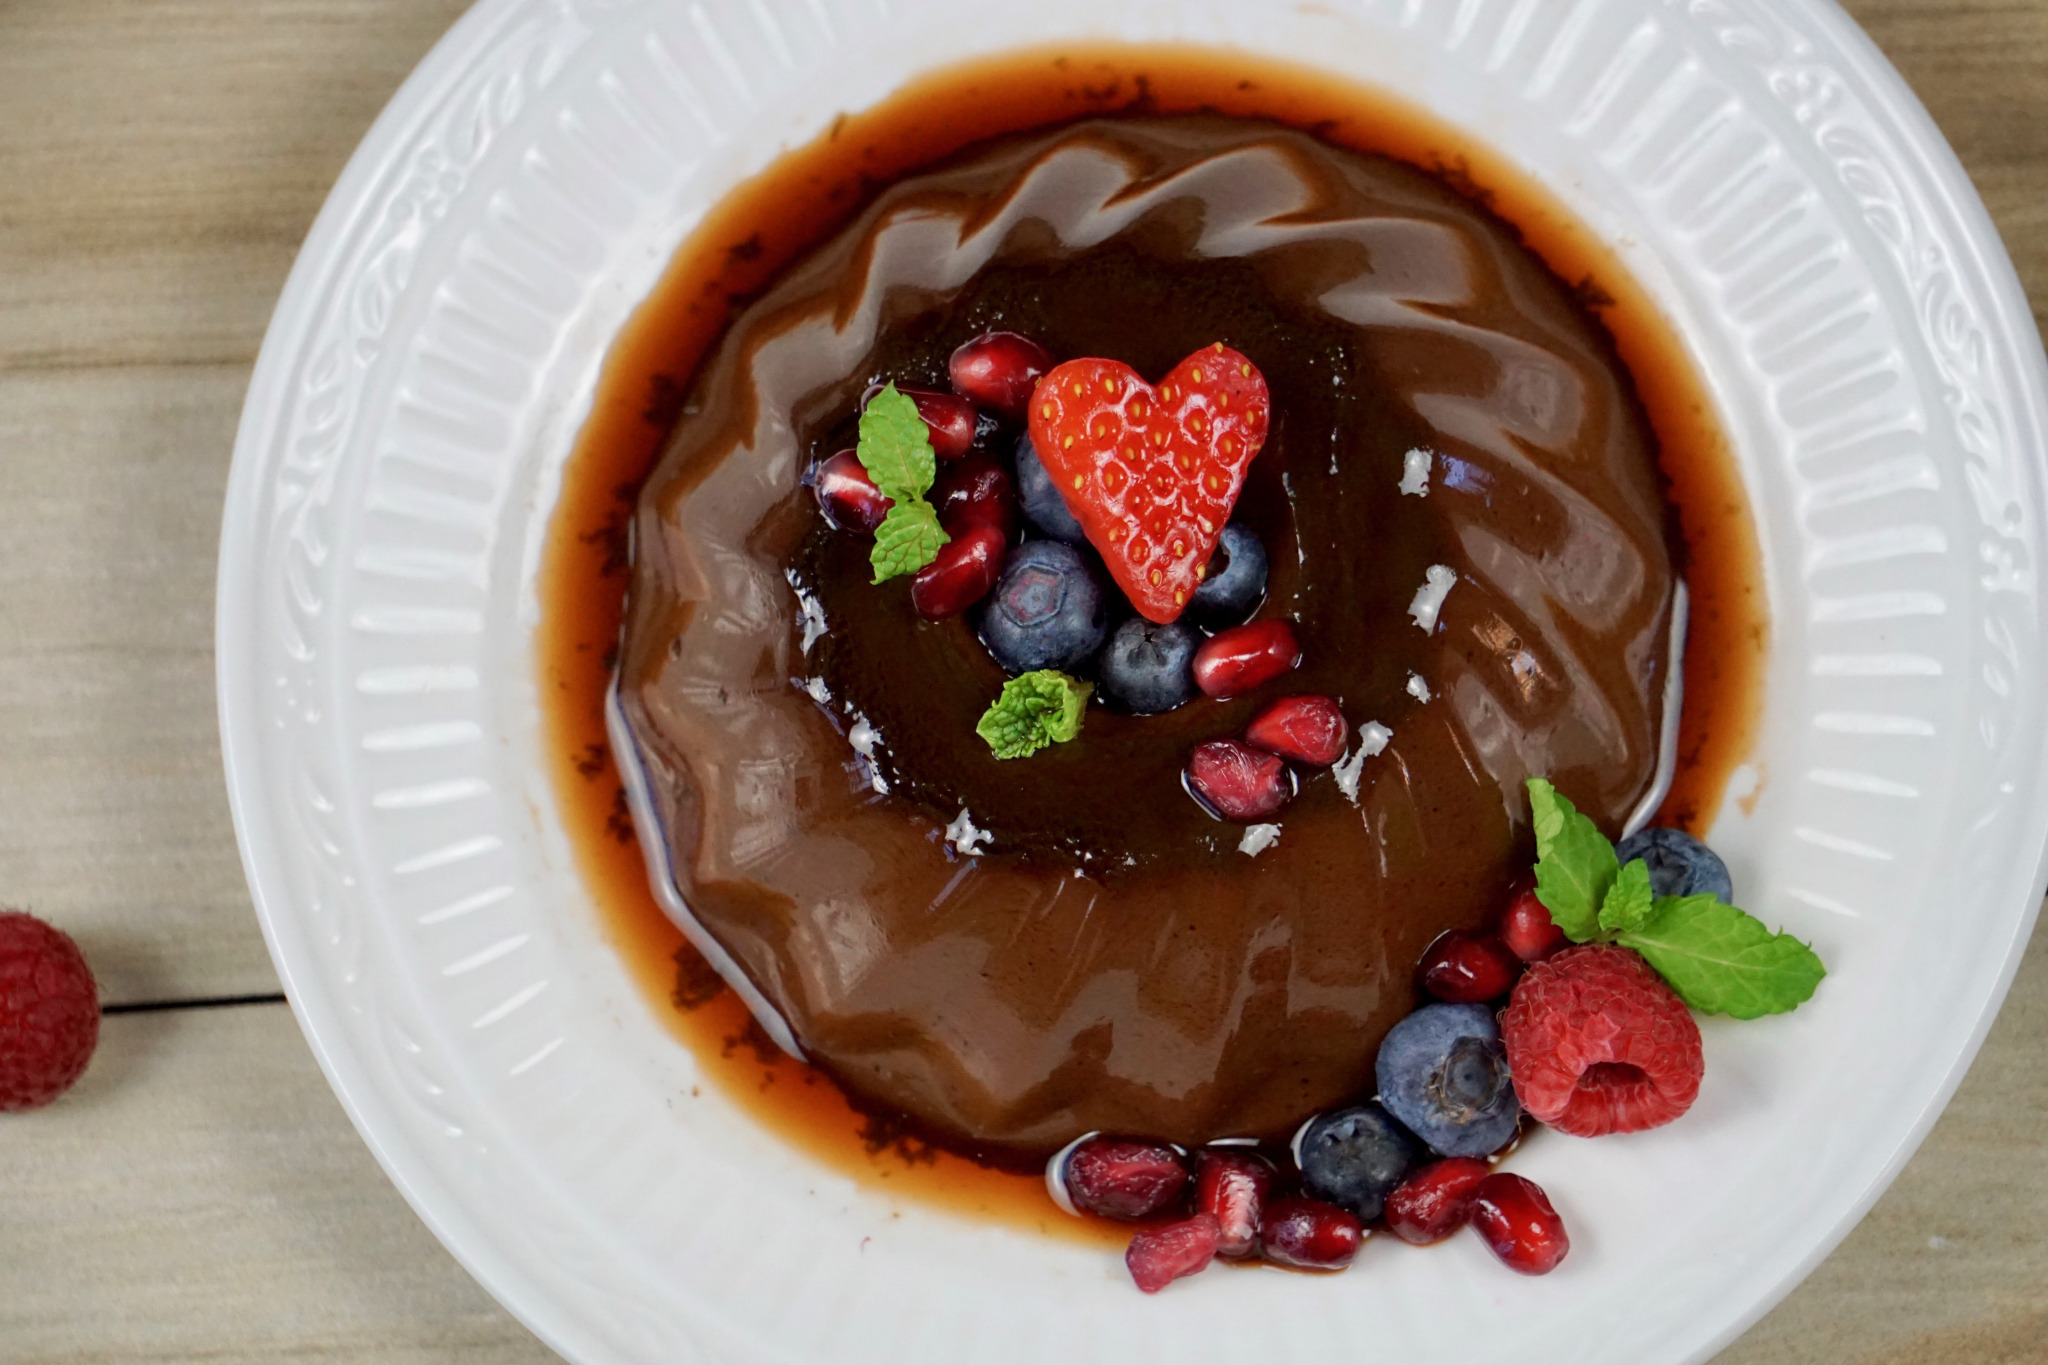 Chocolate flan with fresh berries